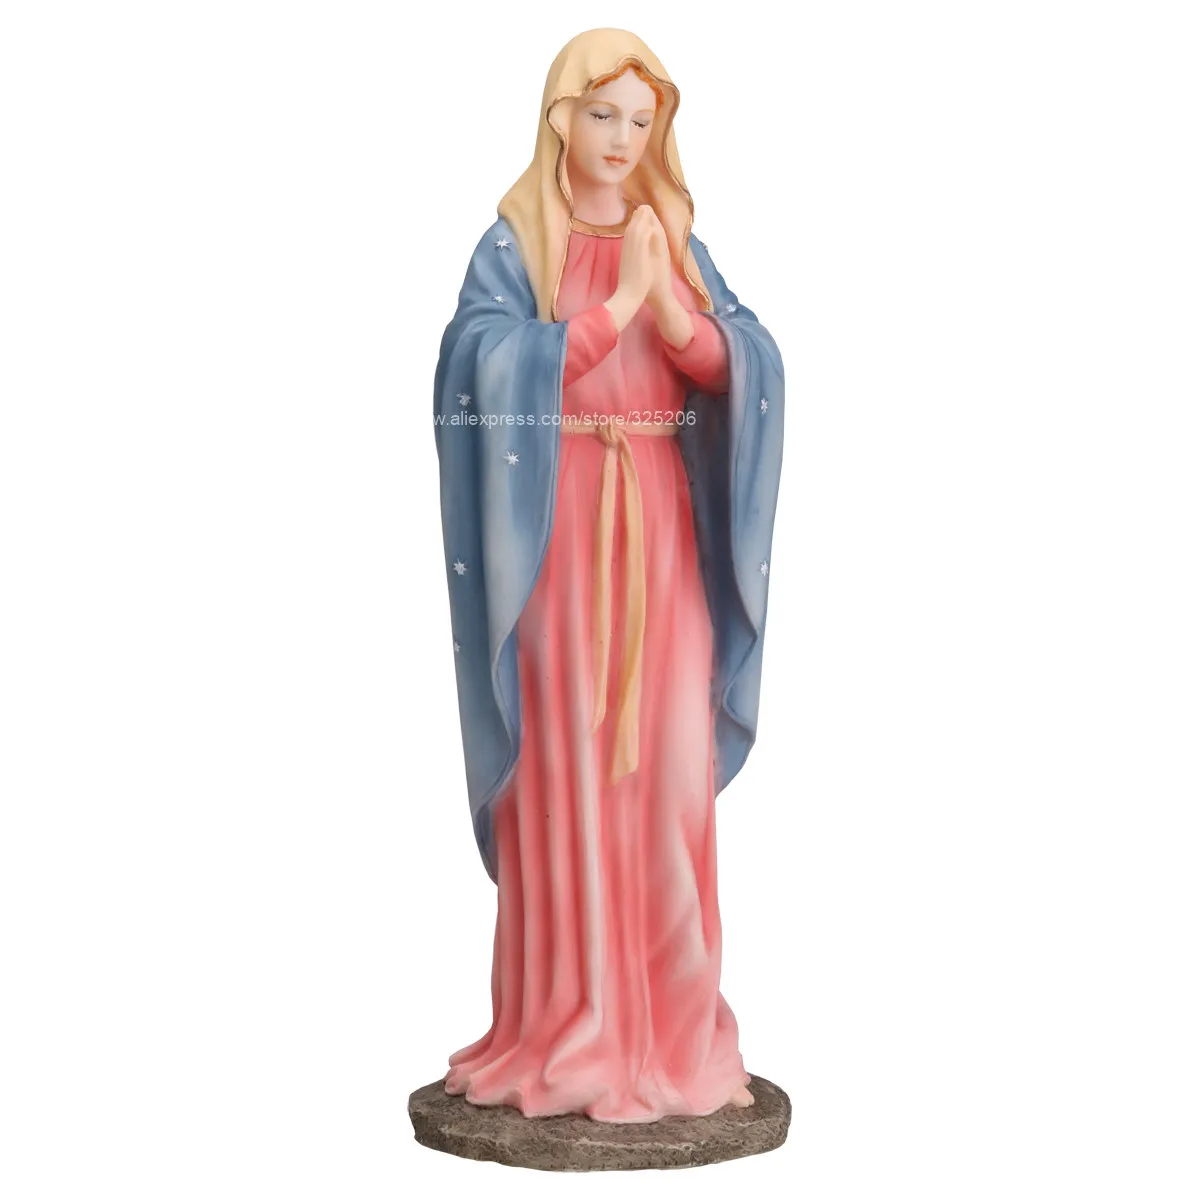 Praying Virgin Mary Saint Statue Figure 20cm 7.8inch NEW